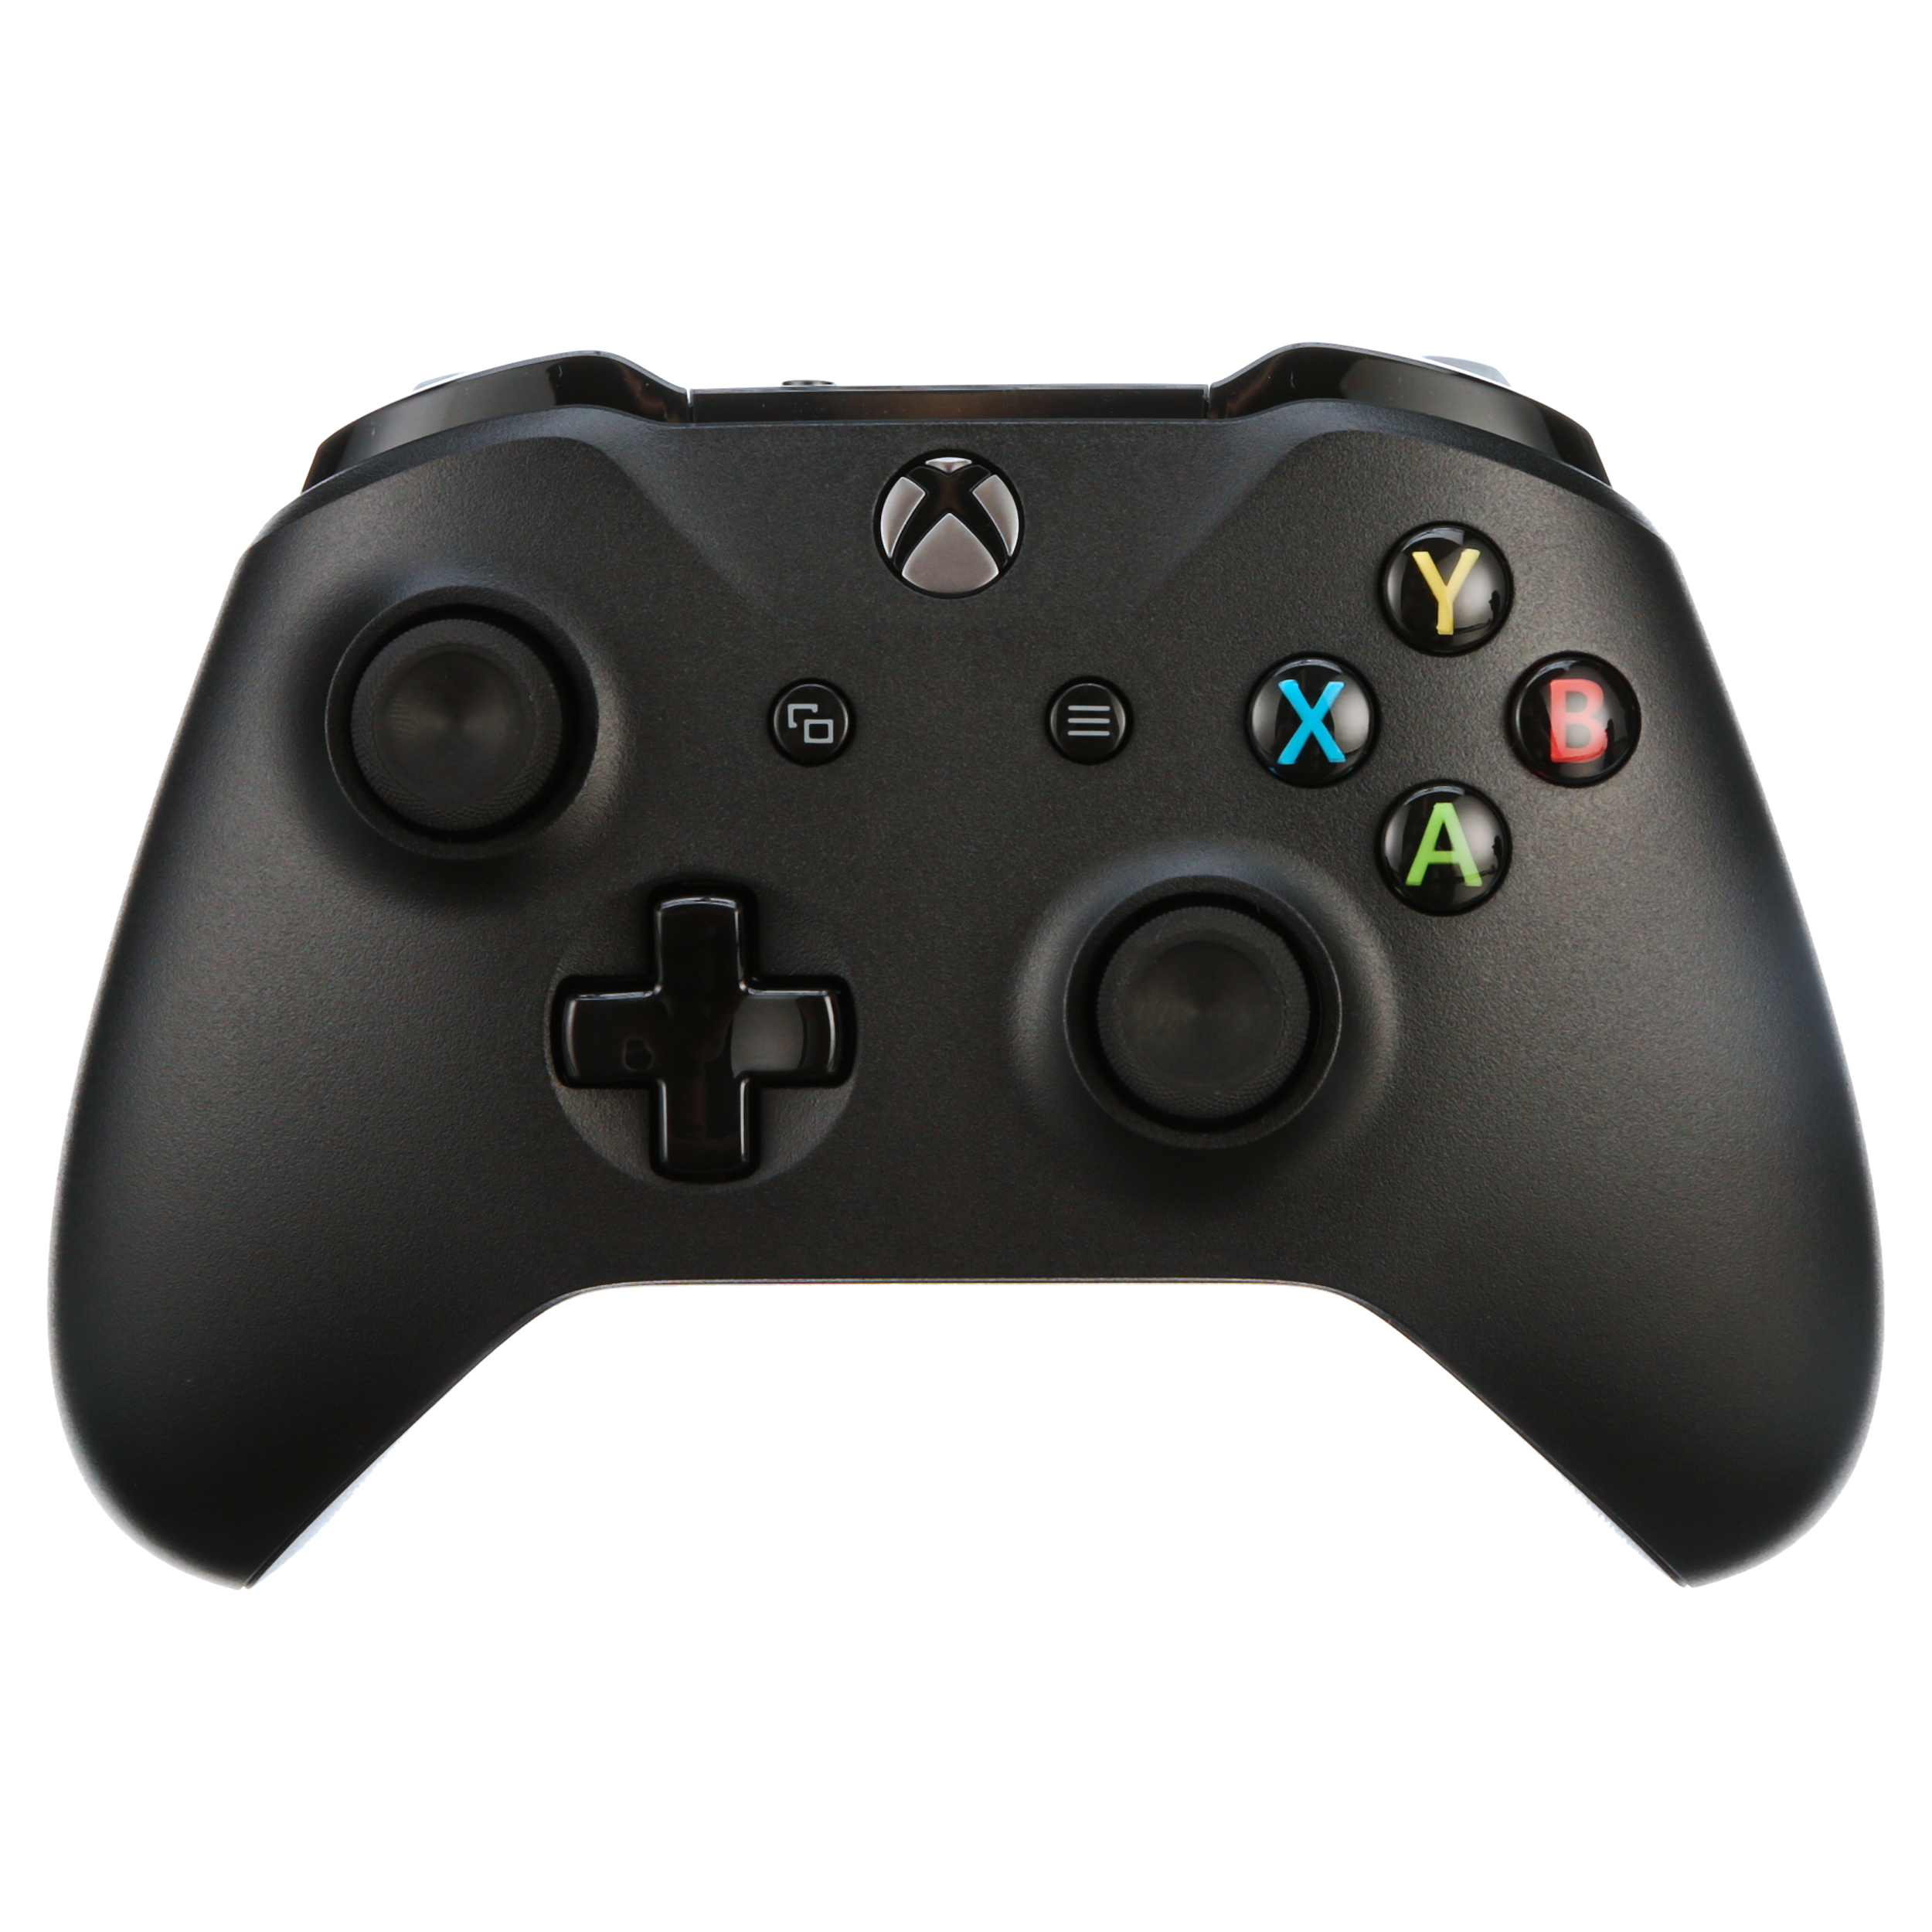 Restored Microsoft Xbox One X 1TB, 4K Ultra HD Gaming Console in Black ...